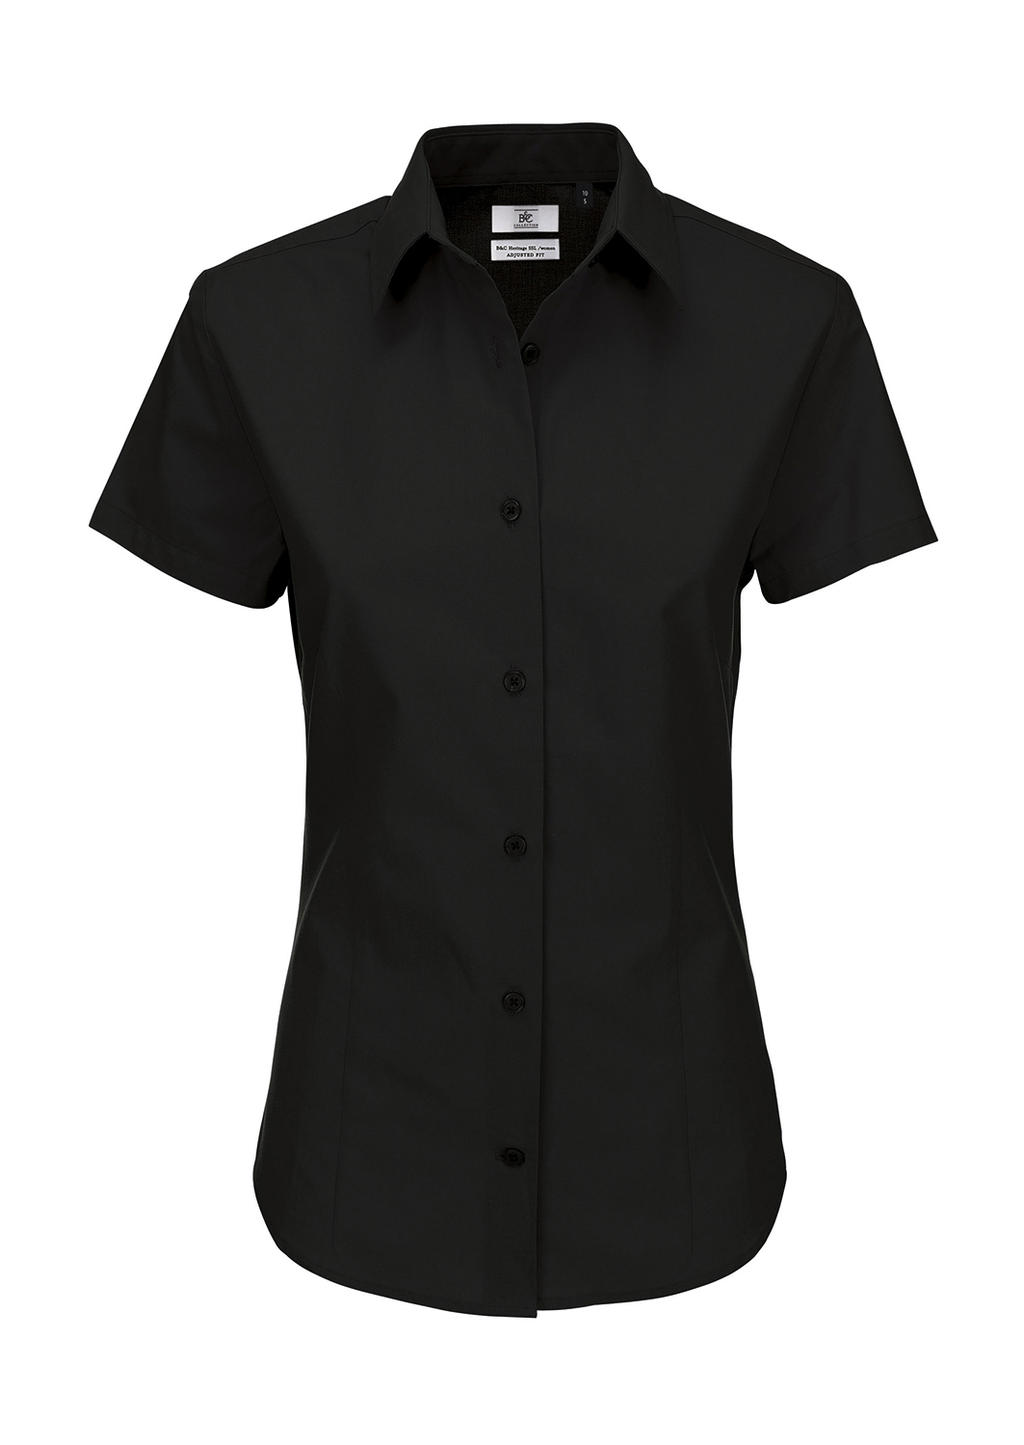  Ladies Heritage Poplin Shirt - SWP44 in Farbe Black